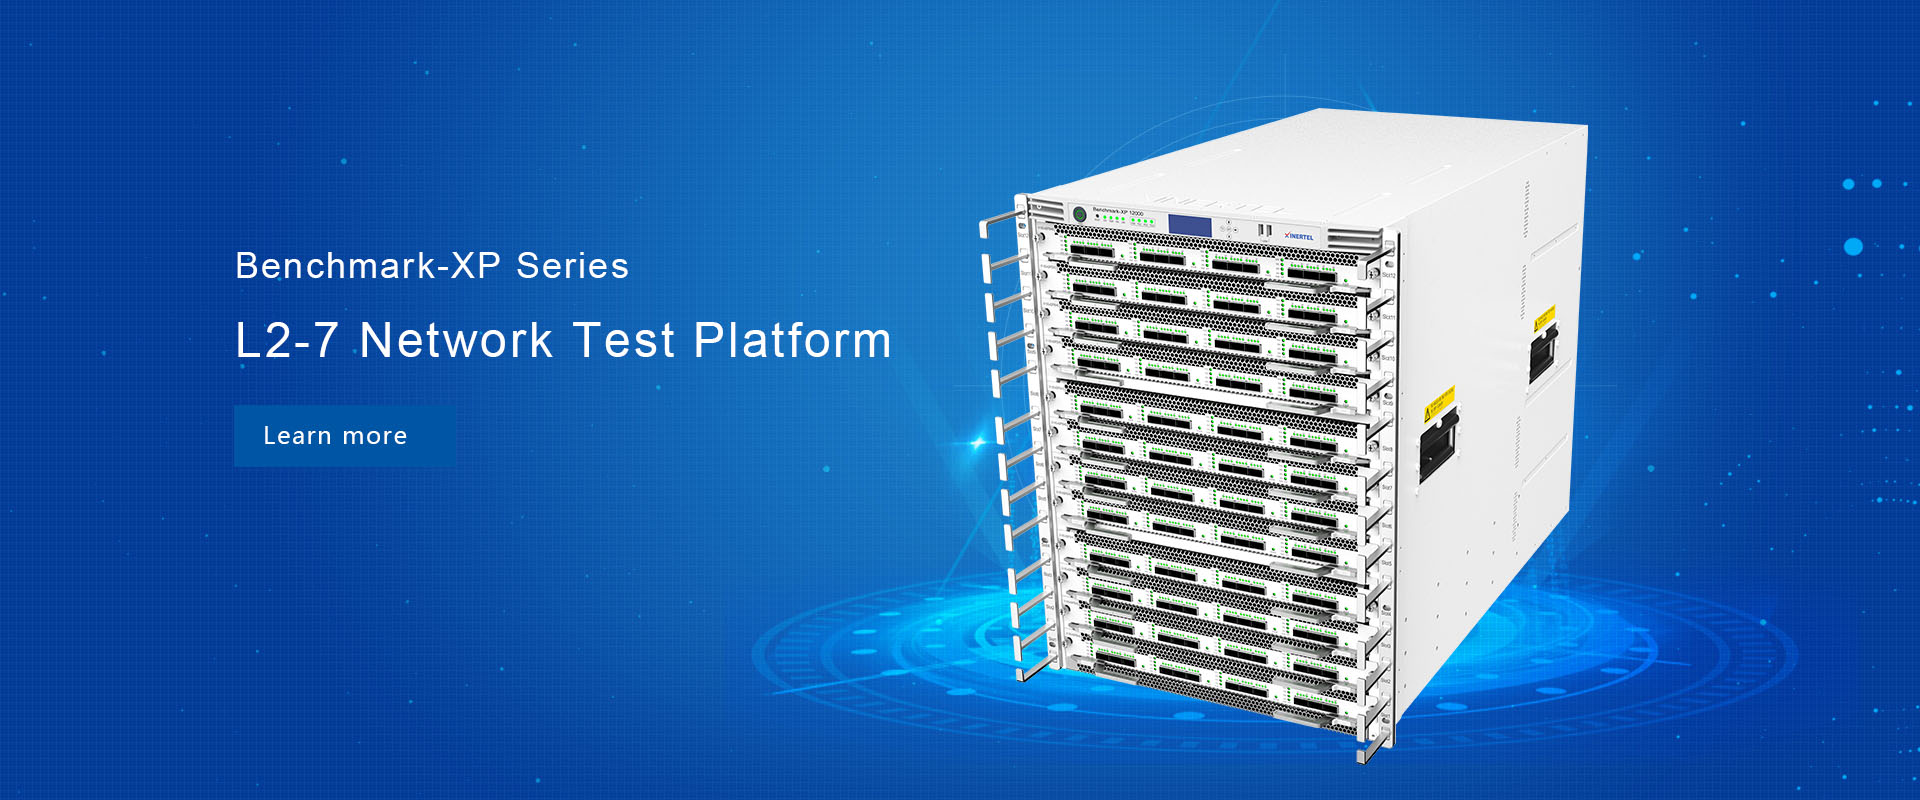 Network Test Platform